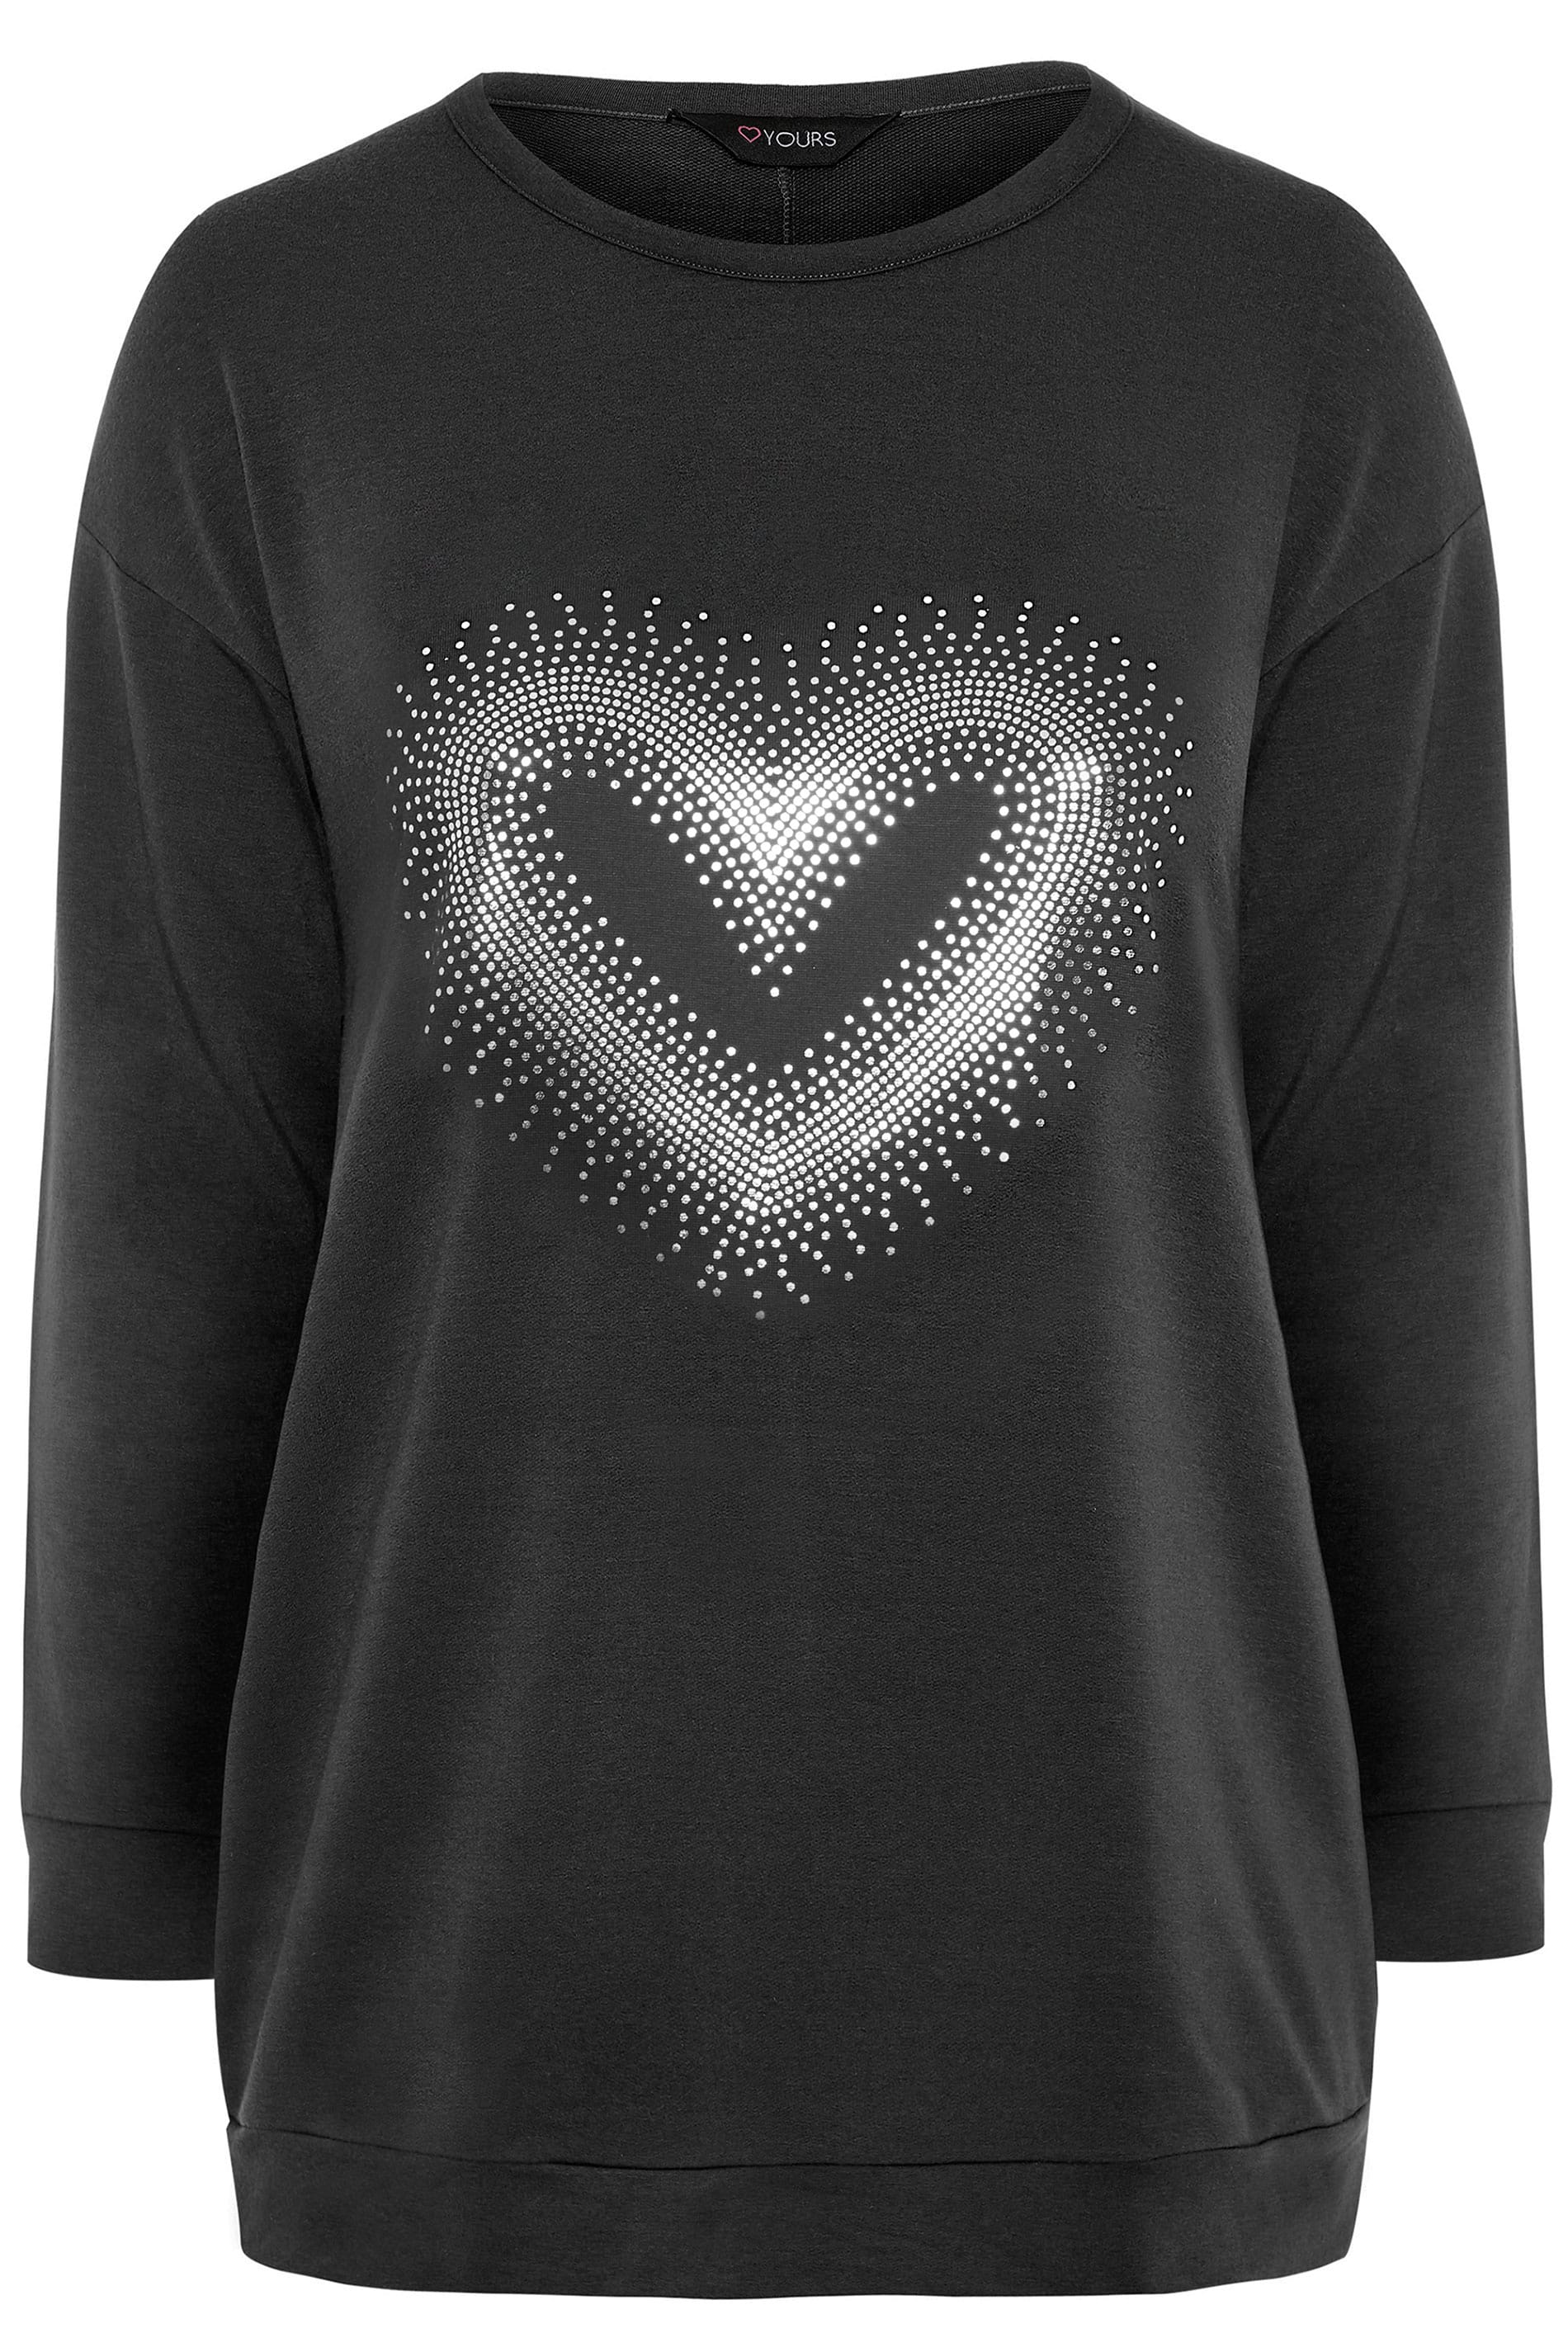 Black Foil Heart Print Sweatshirt | Yours Clothing